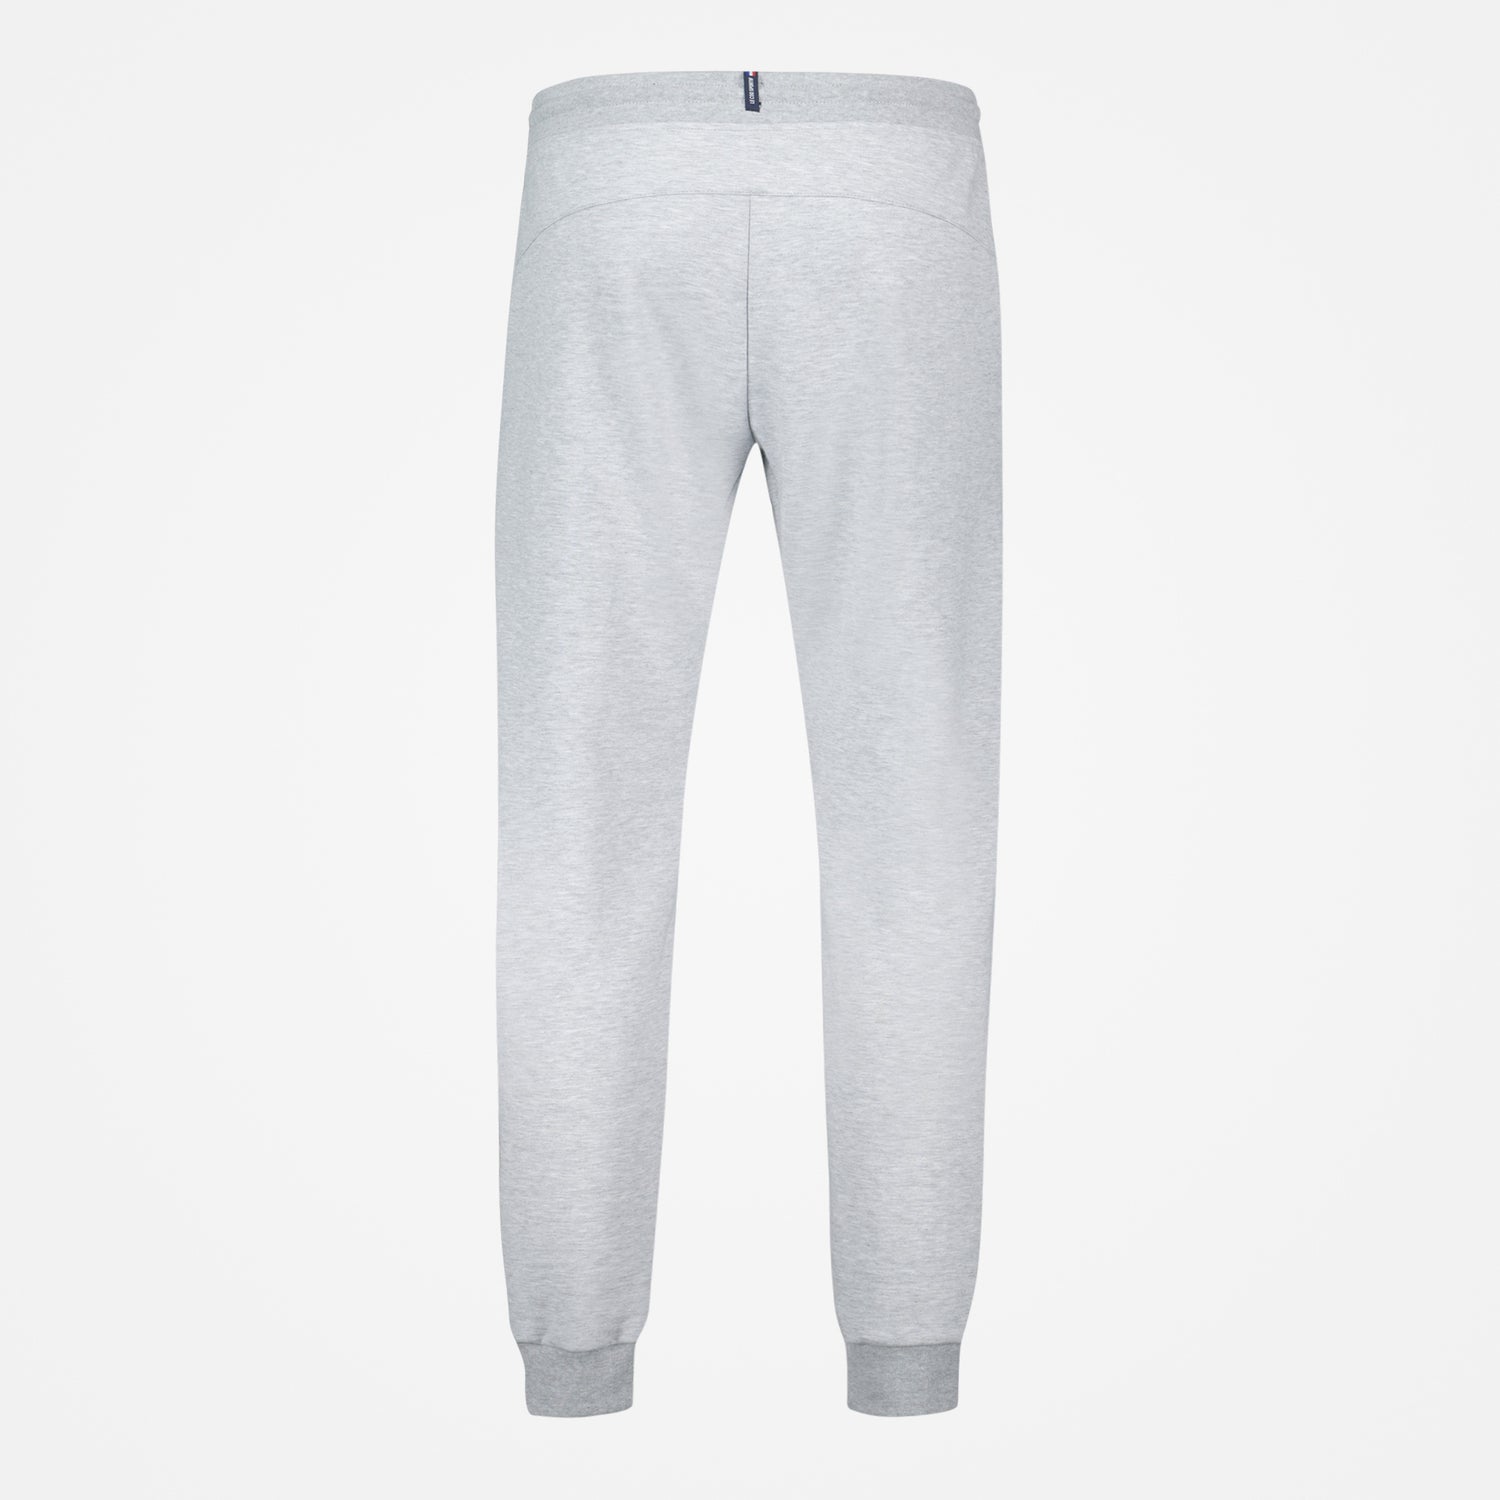 2310570-ESS Pant Regular N°4 M gris chiné clair | Pantalon Regular Homme